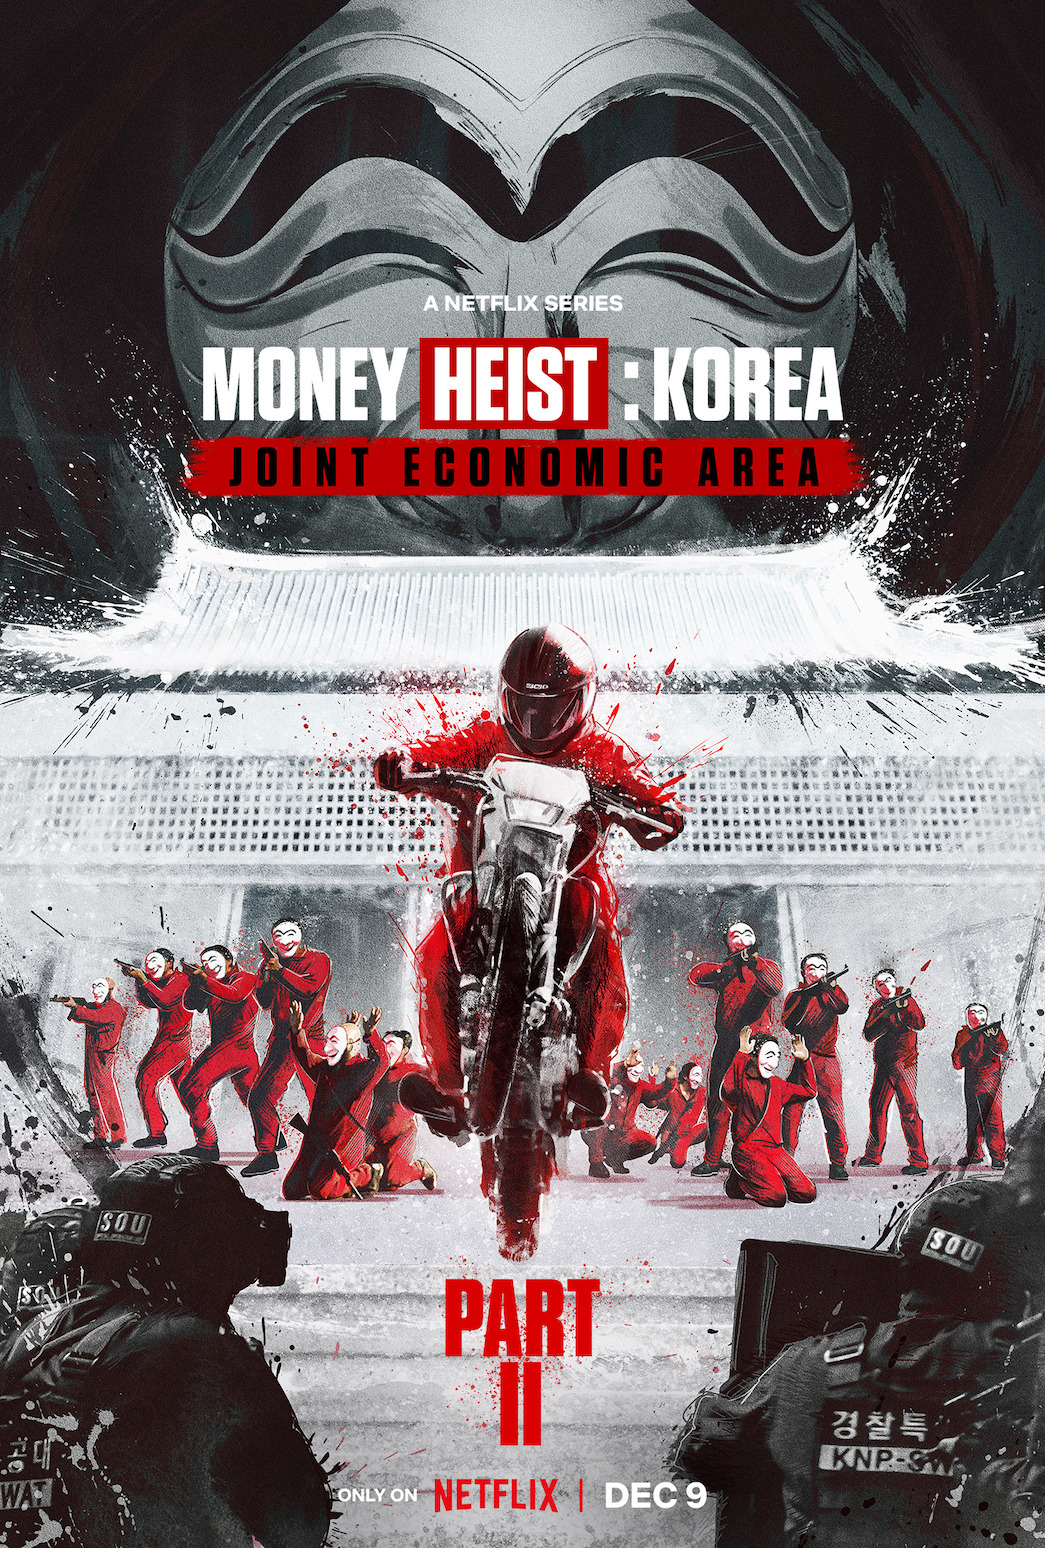 Money Heist: Korea Joint Economic Area Part 2: When will it release on Netflix? 